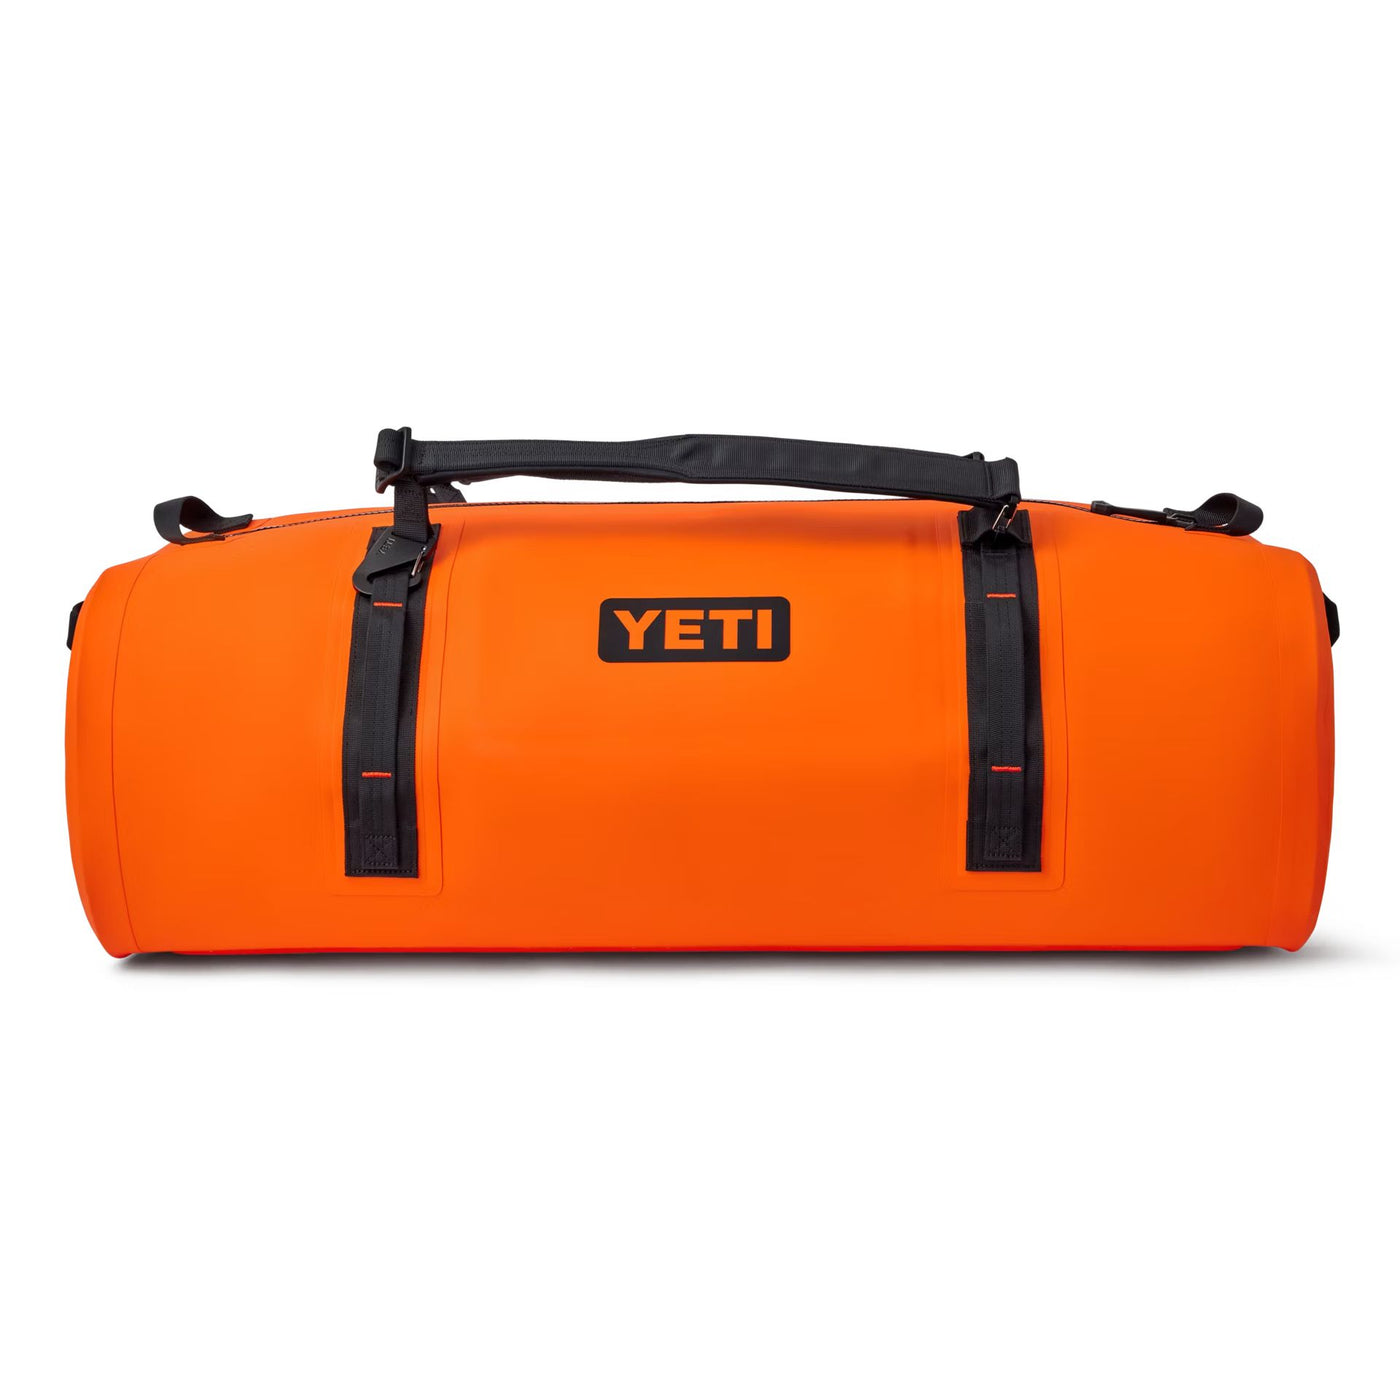 Yeti Panga 100 Submersible Duffle Bag-Hunting/Outdoors-ORANGE/BLACK-Kevin's Fine Outdoor Gear & Apparel